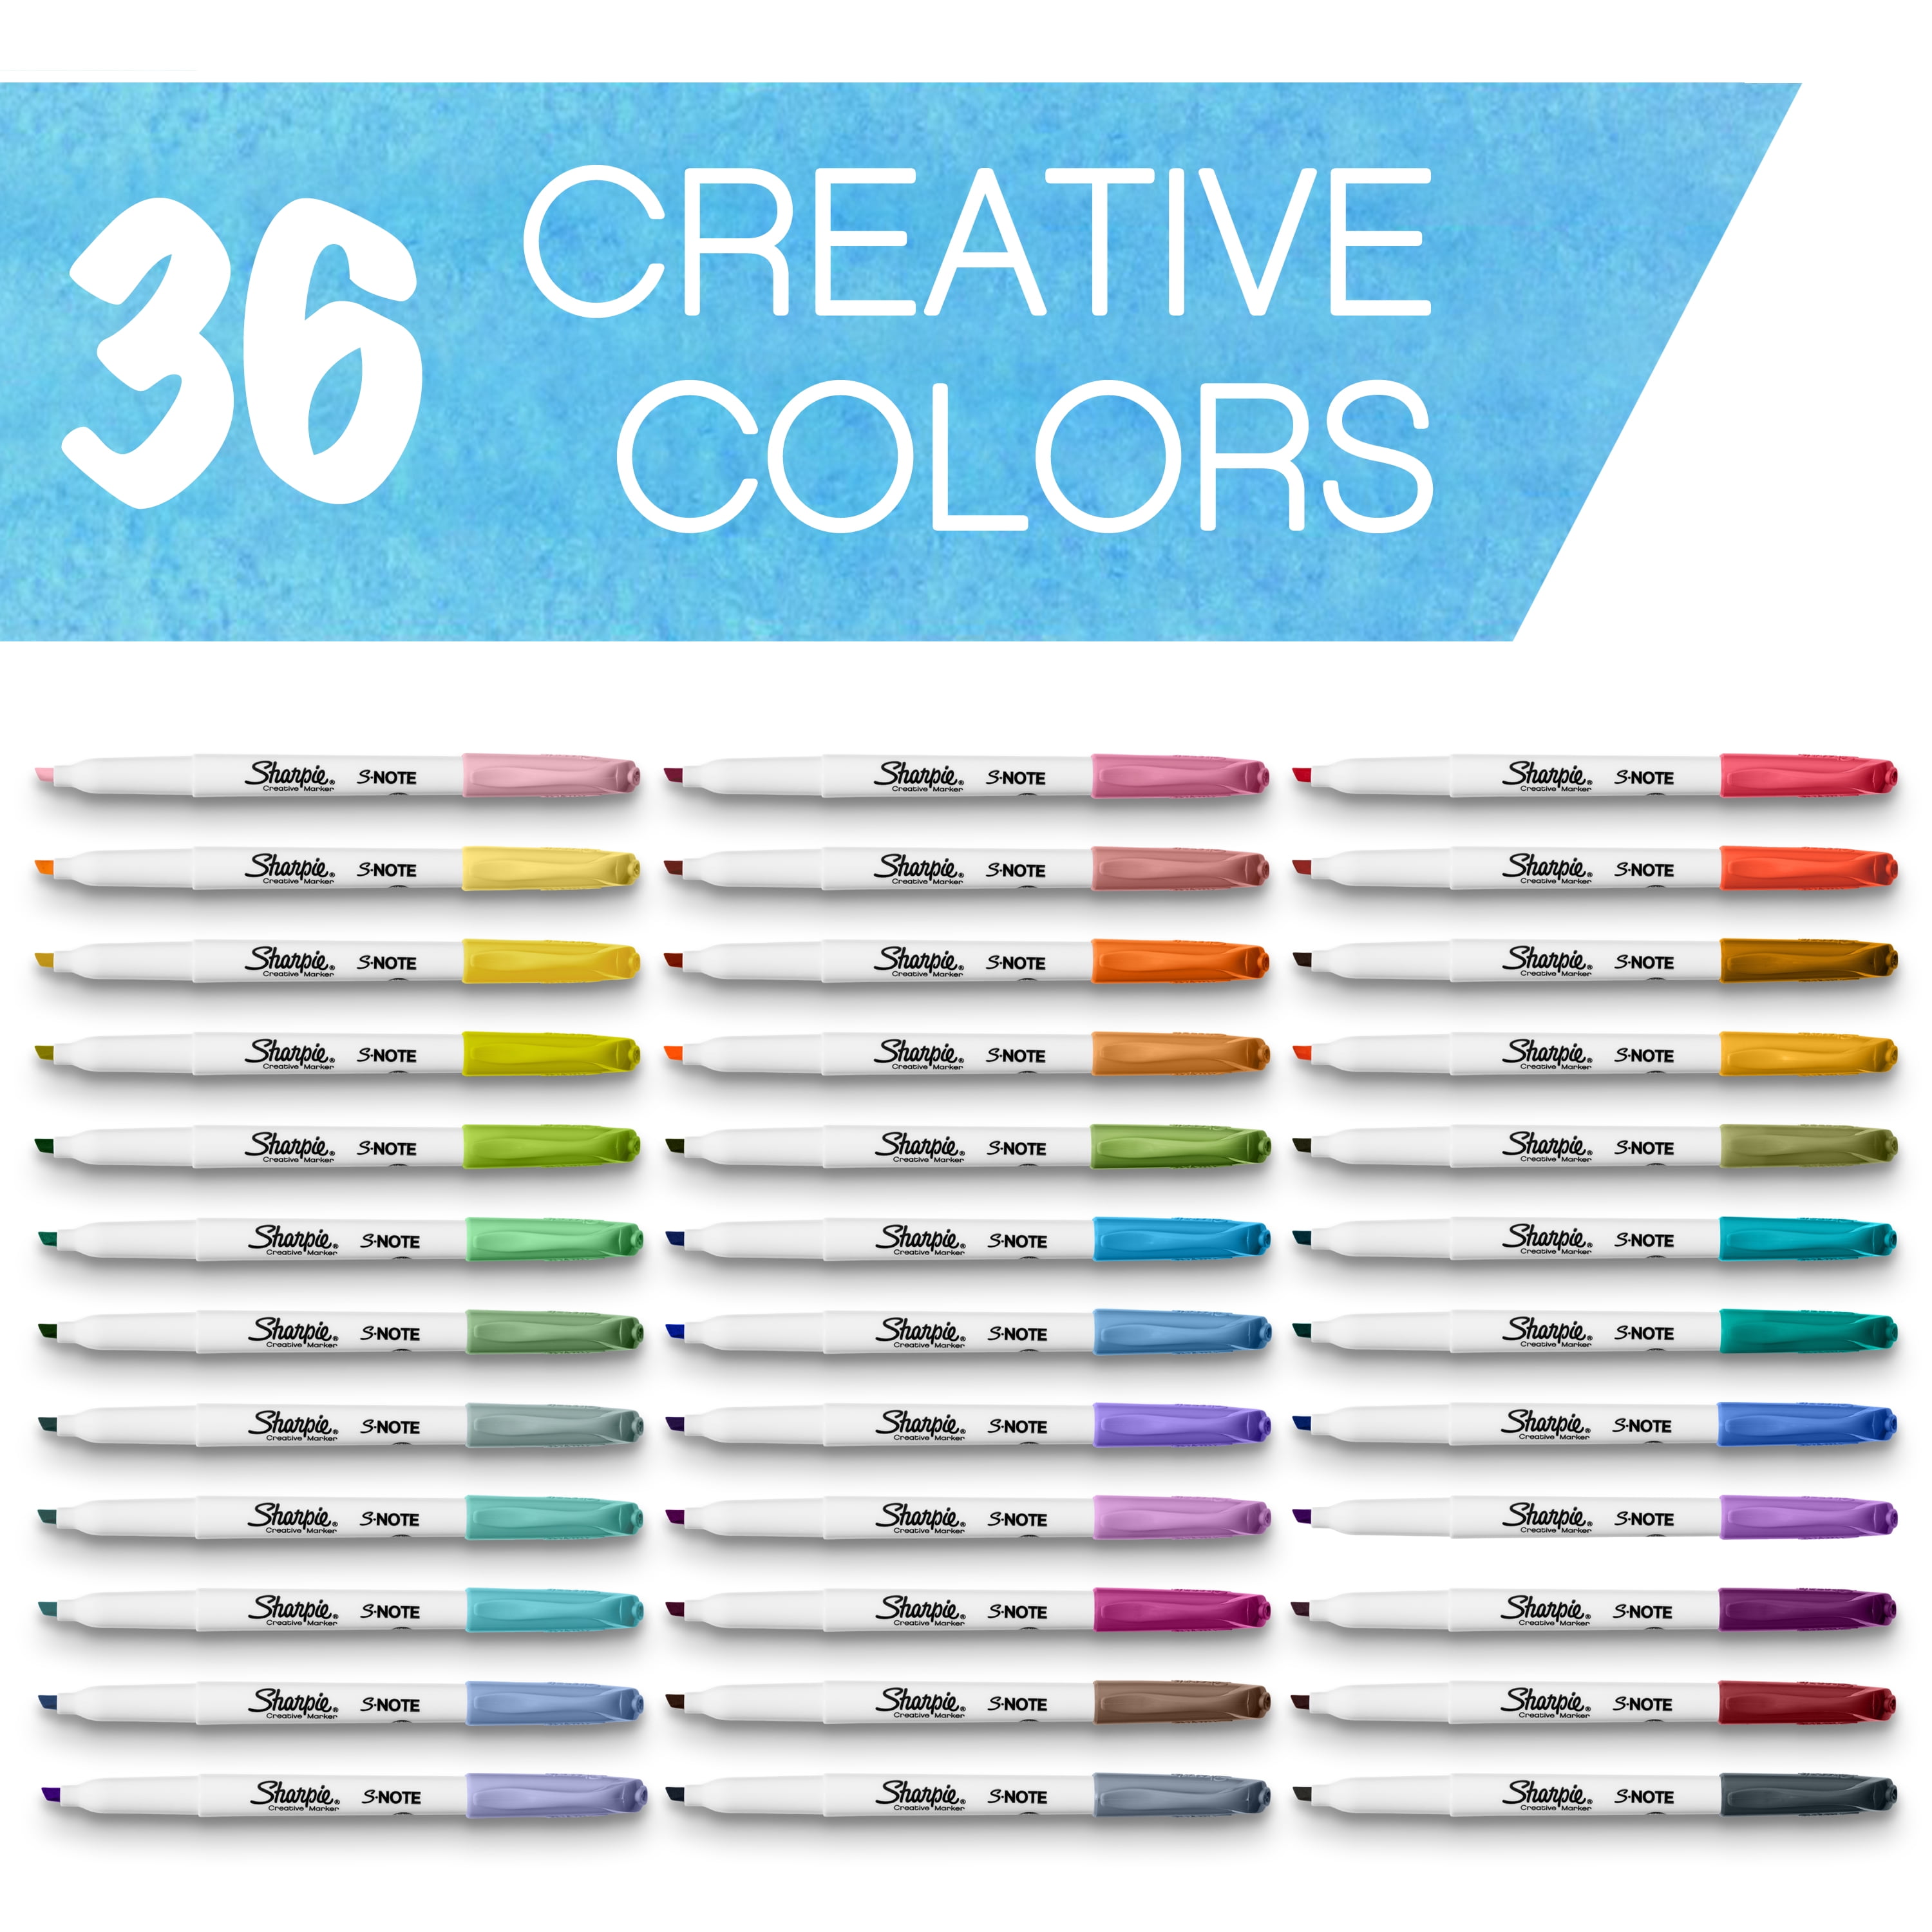 Sharpie S-Note Creative Markers - Set of 36, BLICK Art Materials